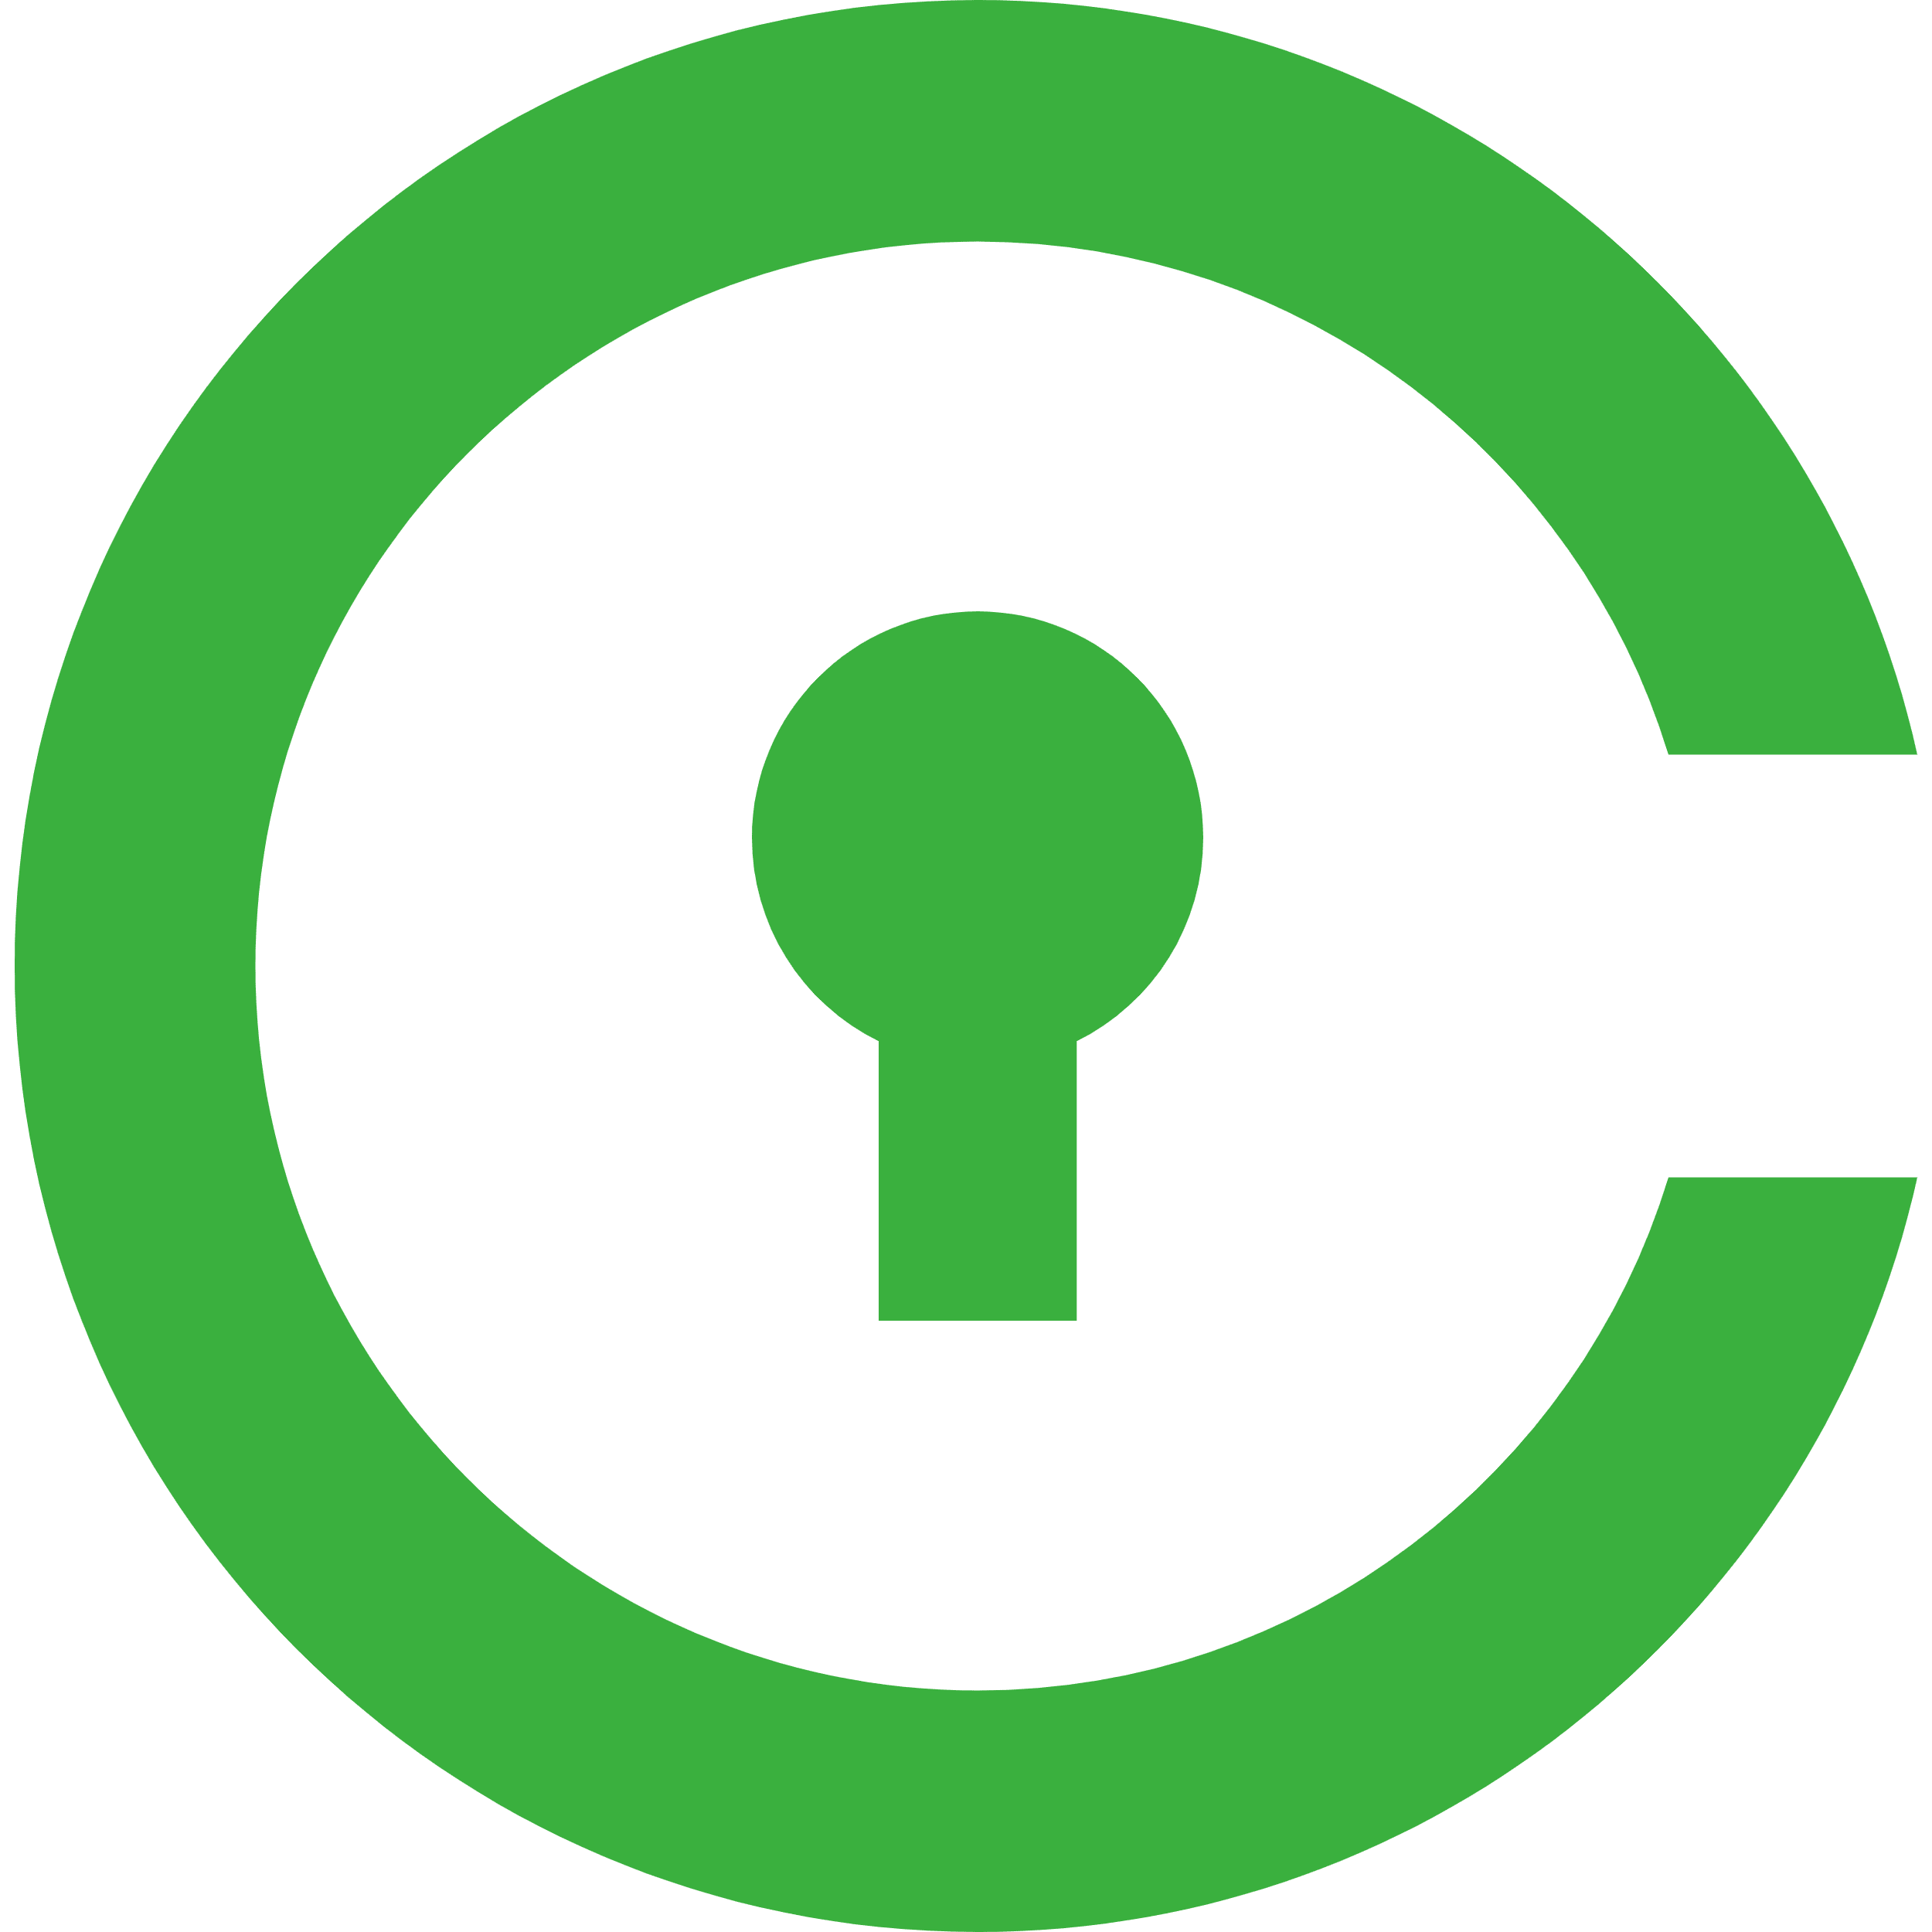 Civic logo in svg format